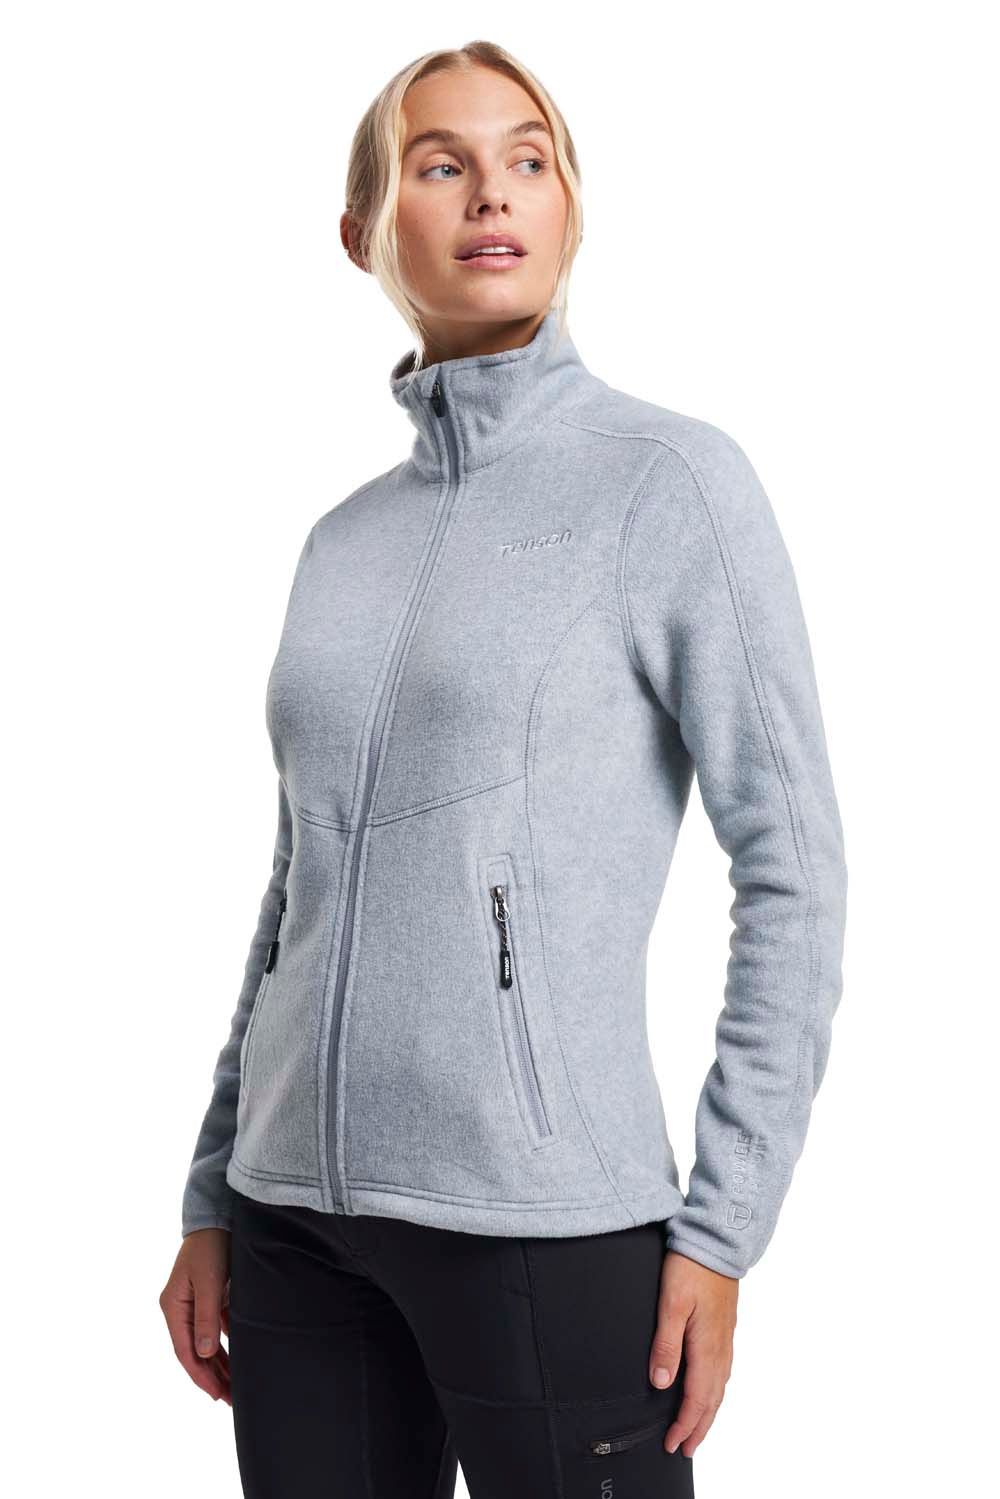 Tenson Women's Miracle Fleece Shirt Grey